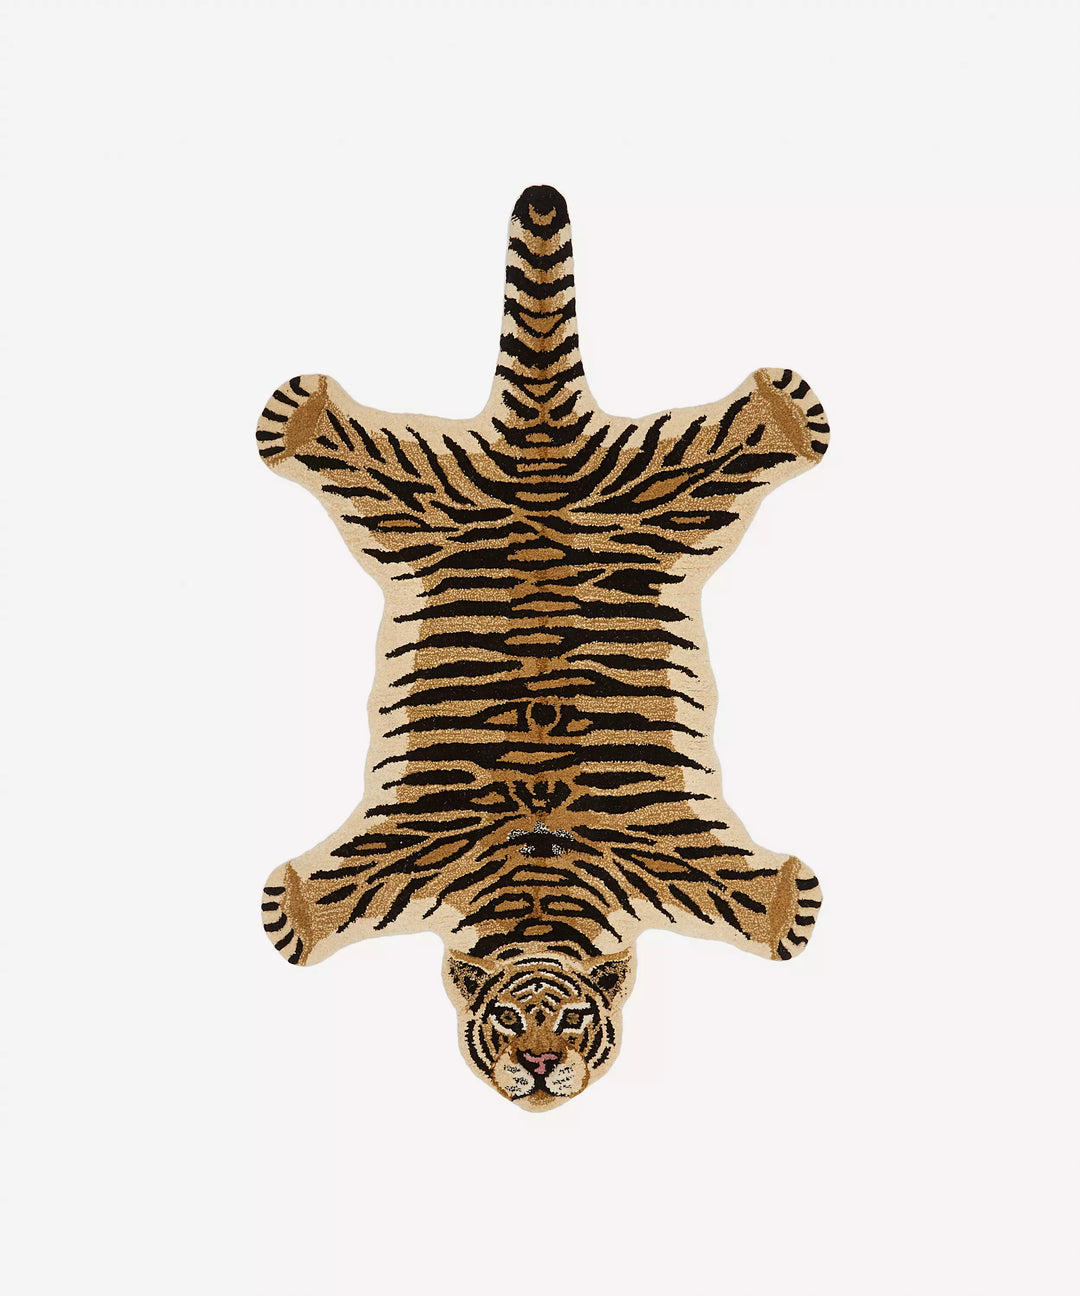 Handmade Animal Rugs, Children Room Rugs, Tiger, Crocodile, Giraffe, Leopard